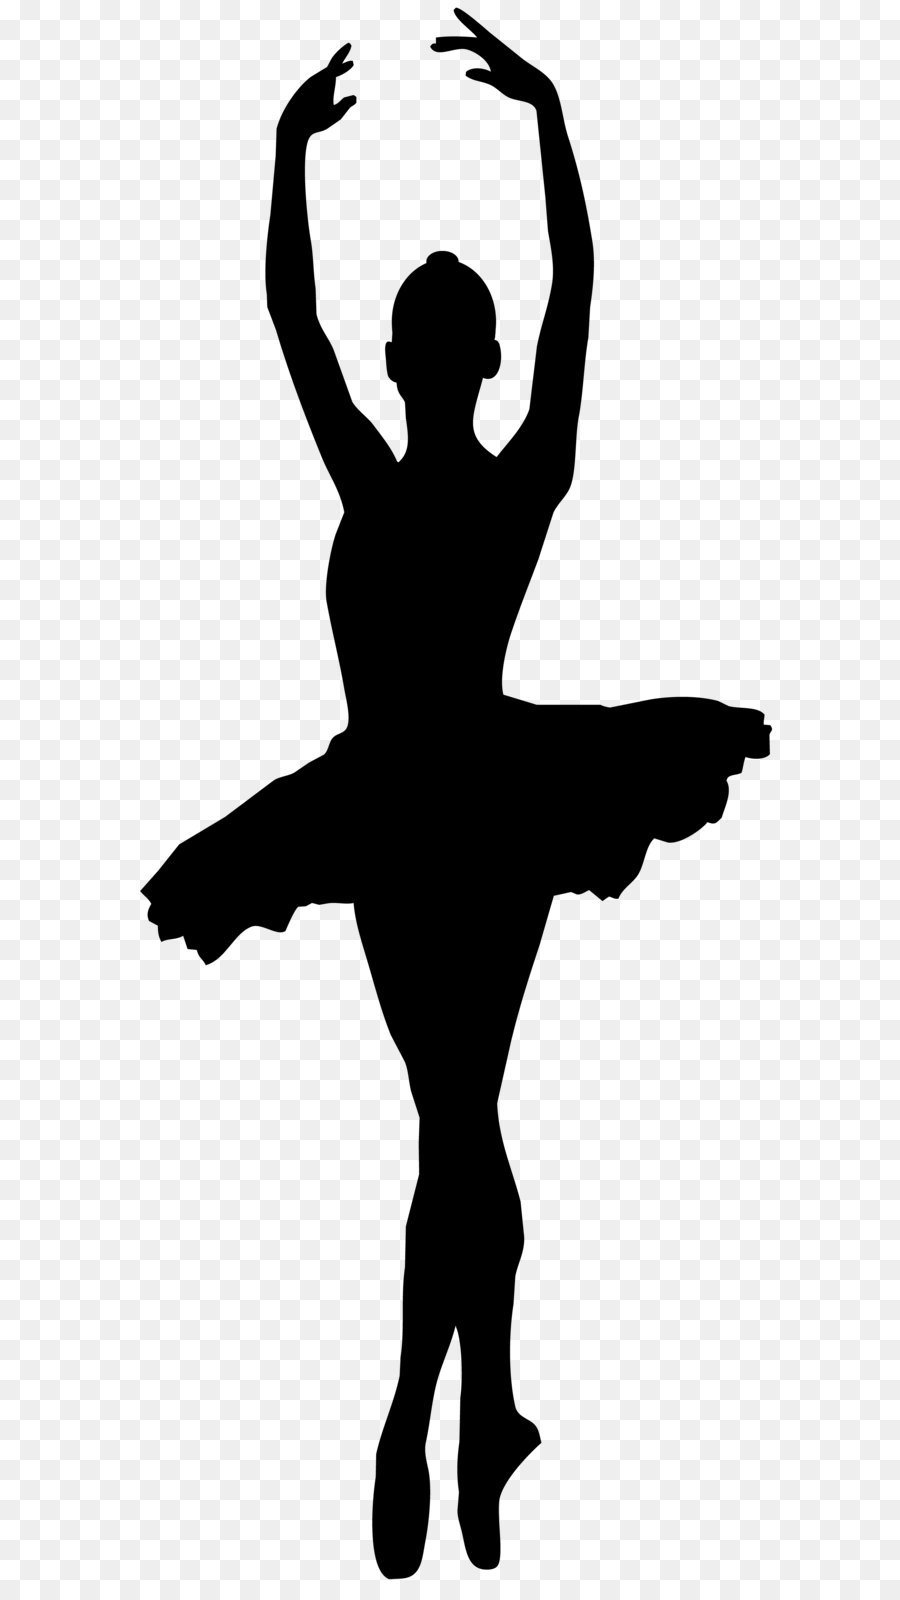 Kingaroy Silhouette Drawdy Dance School Ballet Dancer Clip art - Ballerina Silhouette PNG Clip Art Image png download - 3277*8000 - Free Transparent Paris Opera Ballet png Download.